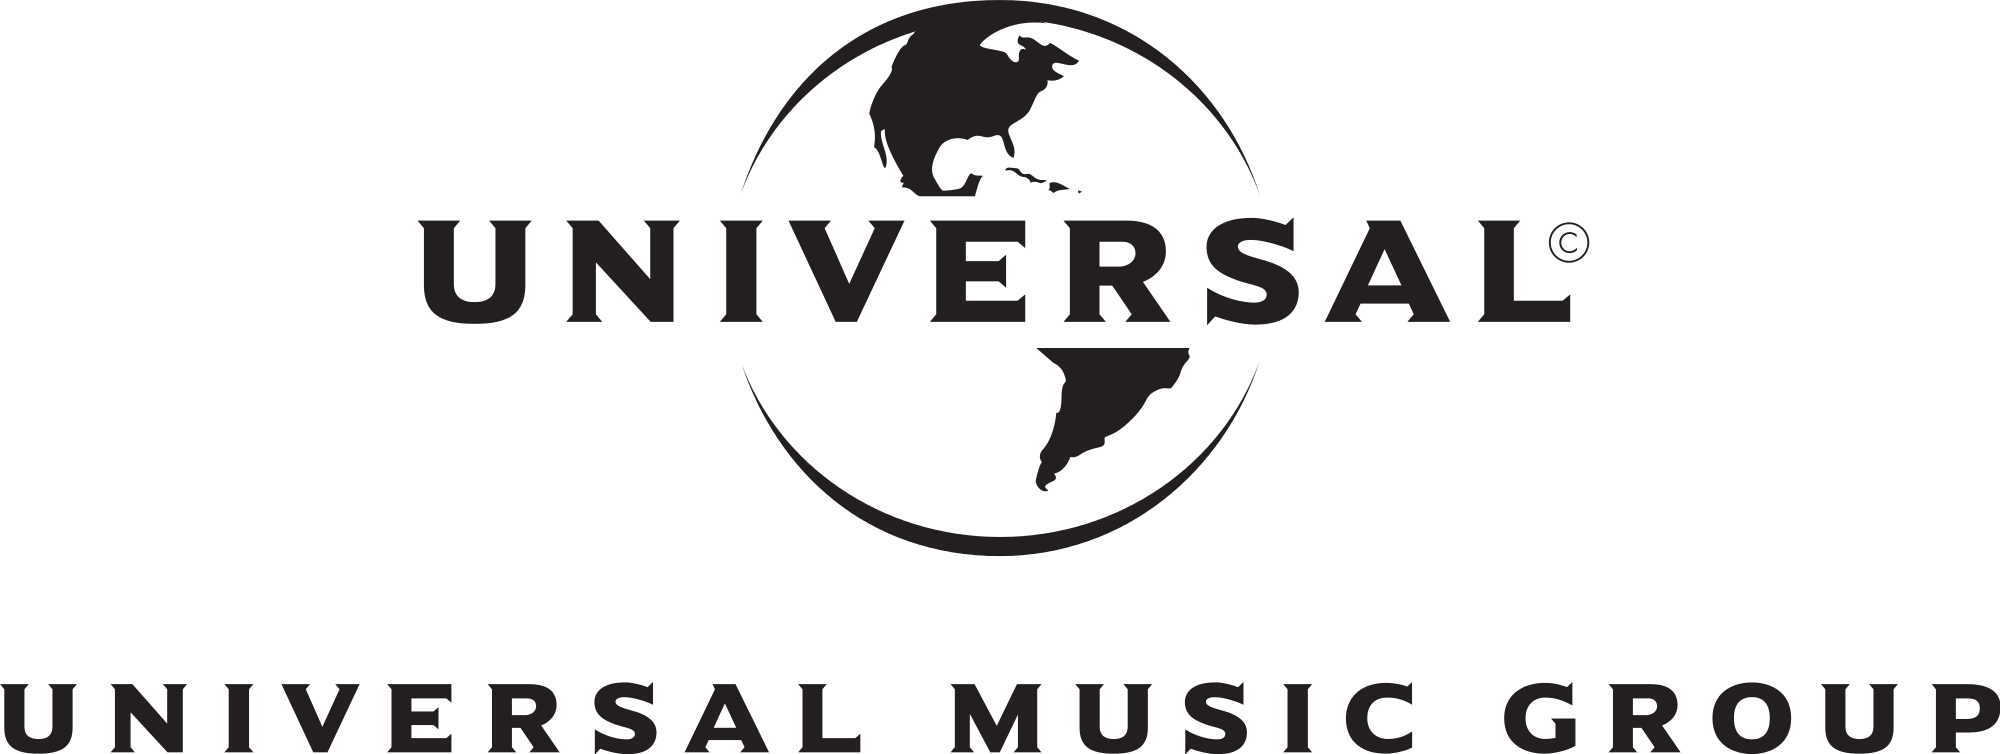 Universal Music Group Brand Logo